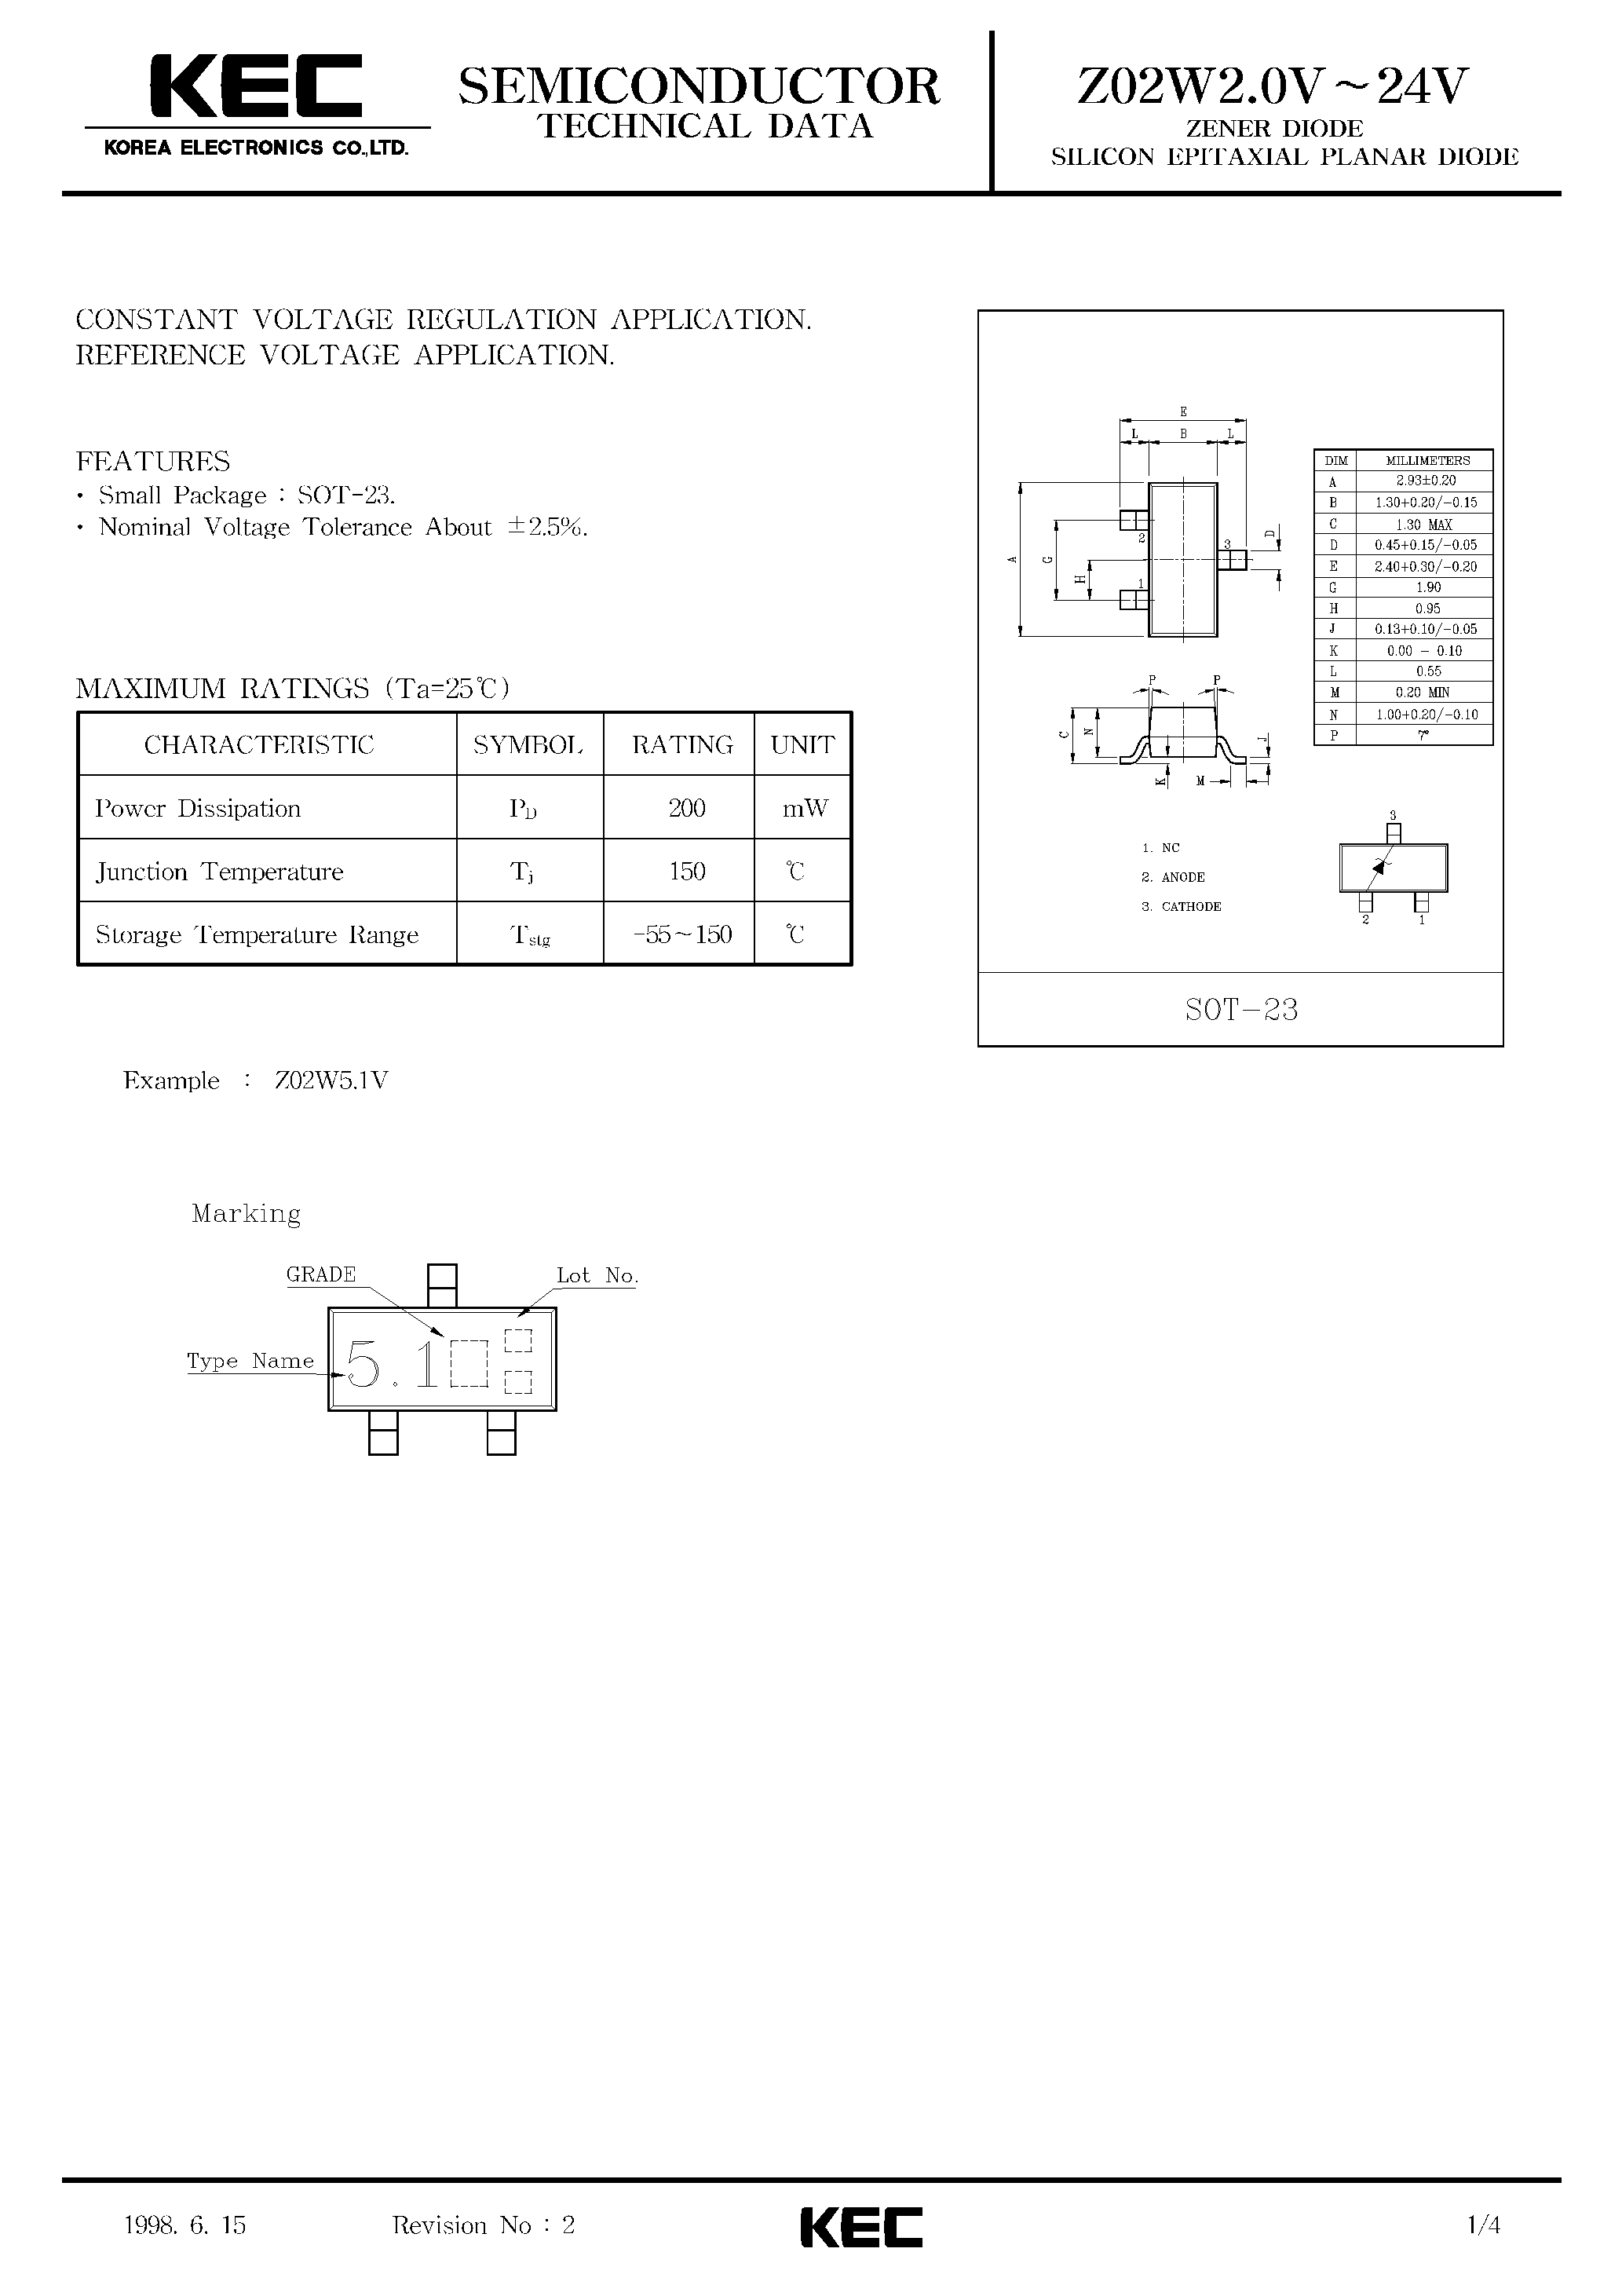 Datasheet Z02W51V - ZENER DIODE SILICON EPITAXIAL PLANAR DIODE (CONSTANT VOLTAGE REGULATION/ REFERENCE VOLTAGE) page 1